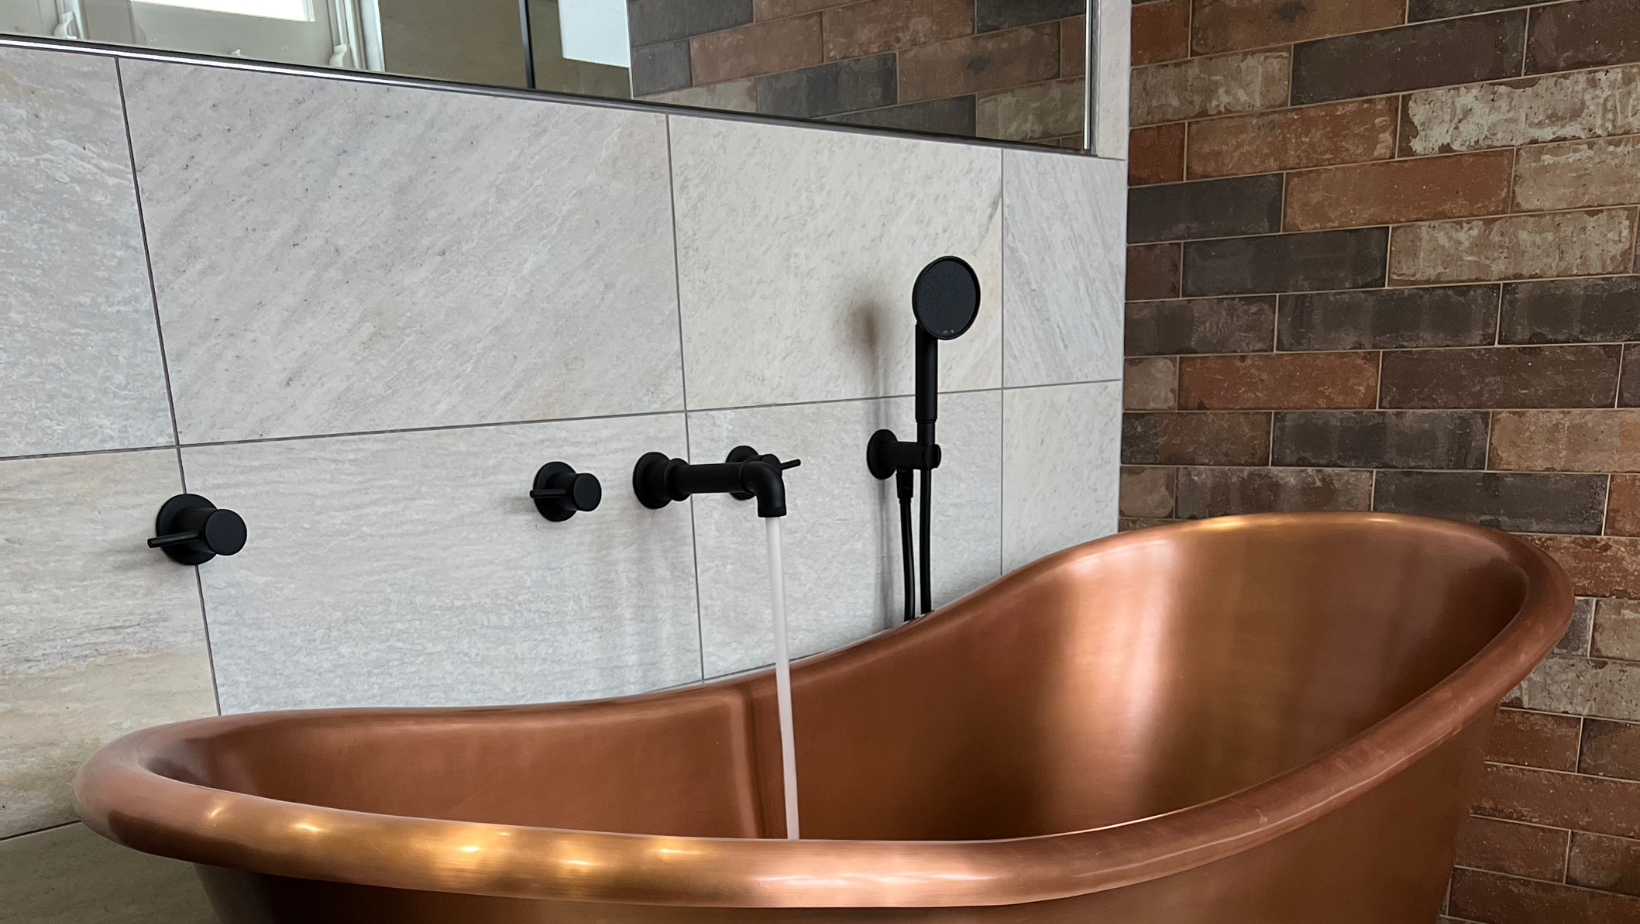 Bespoke copper bath installation in luxury bathroom